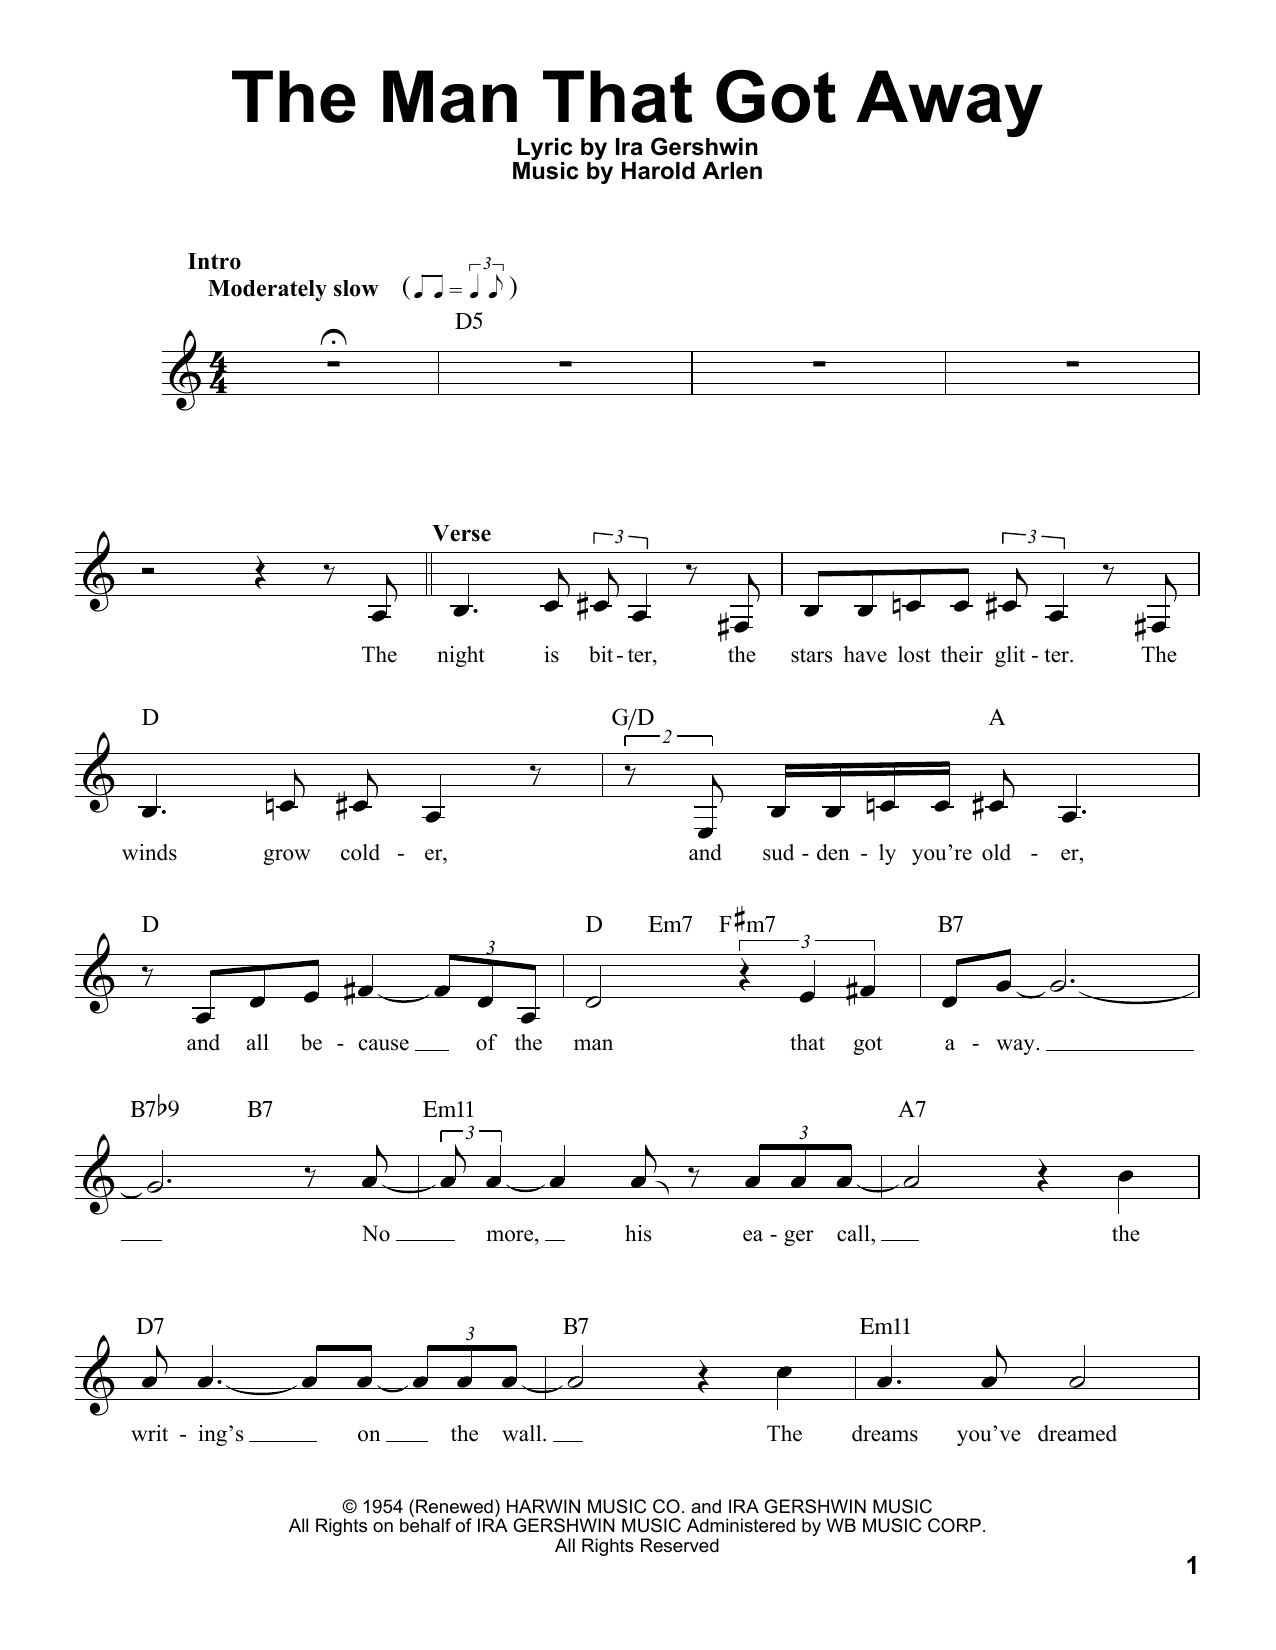 Ira Gershwin The Man That Got Away Sheet Music Notes & Chords for Voice - Download or Print PDF